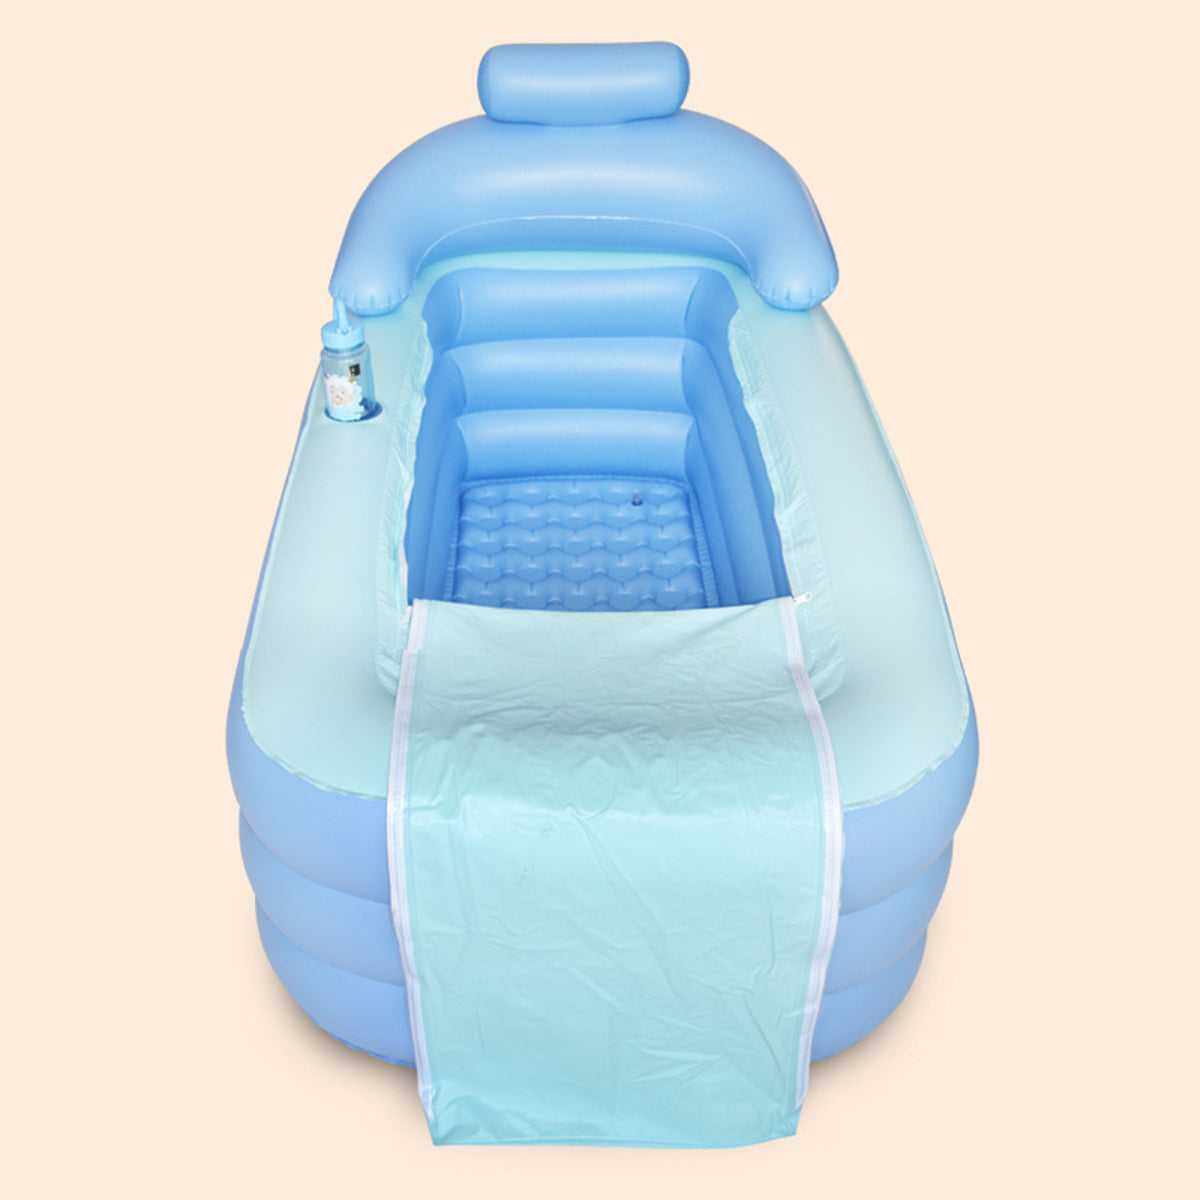 Foldable Inflatable Bathtub 160x84x64cm PVC Adult  Bath Tub with Air Pump